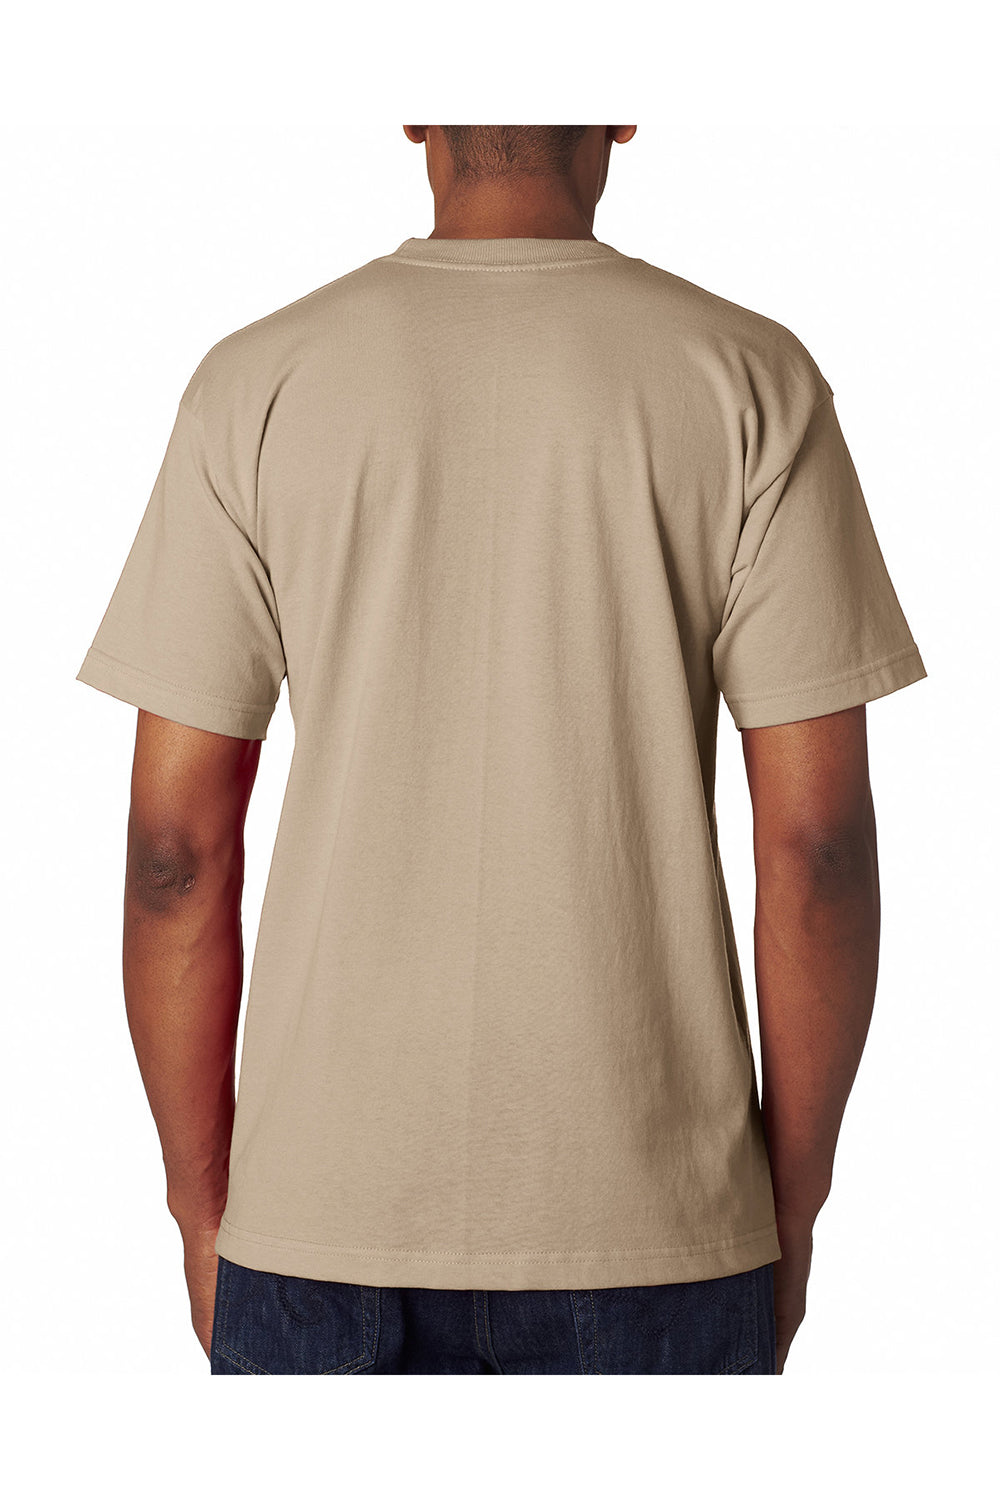 Bayside BA7100 Mens USA Made Short Sleeve Crewneck T-Shirt w/ Pocket Sand Model Back